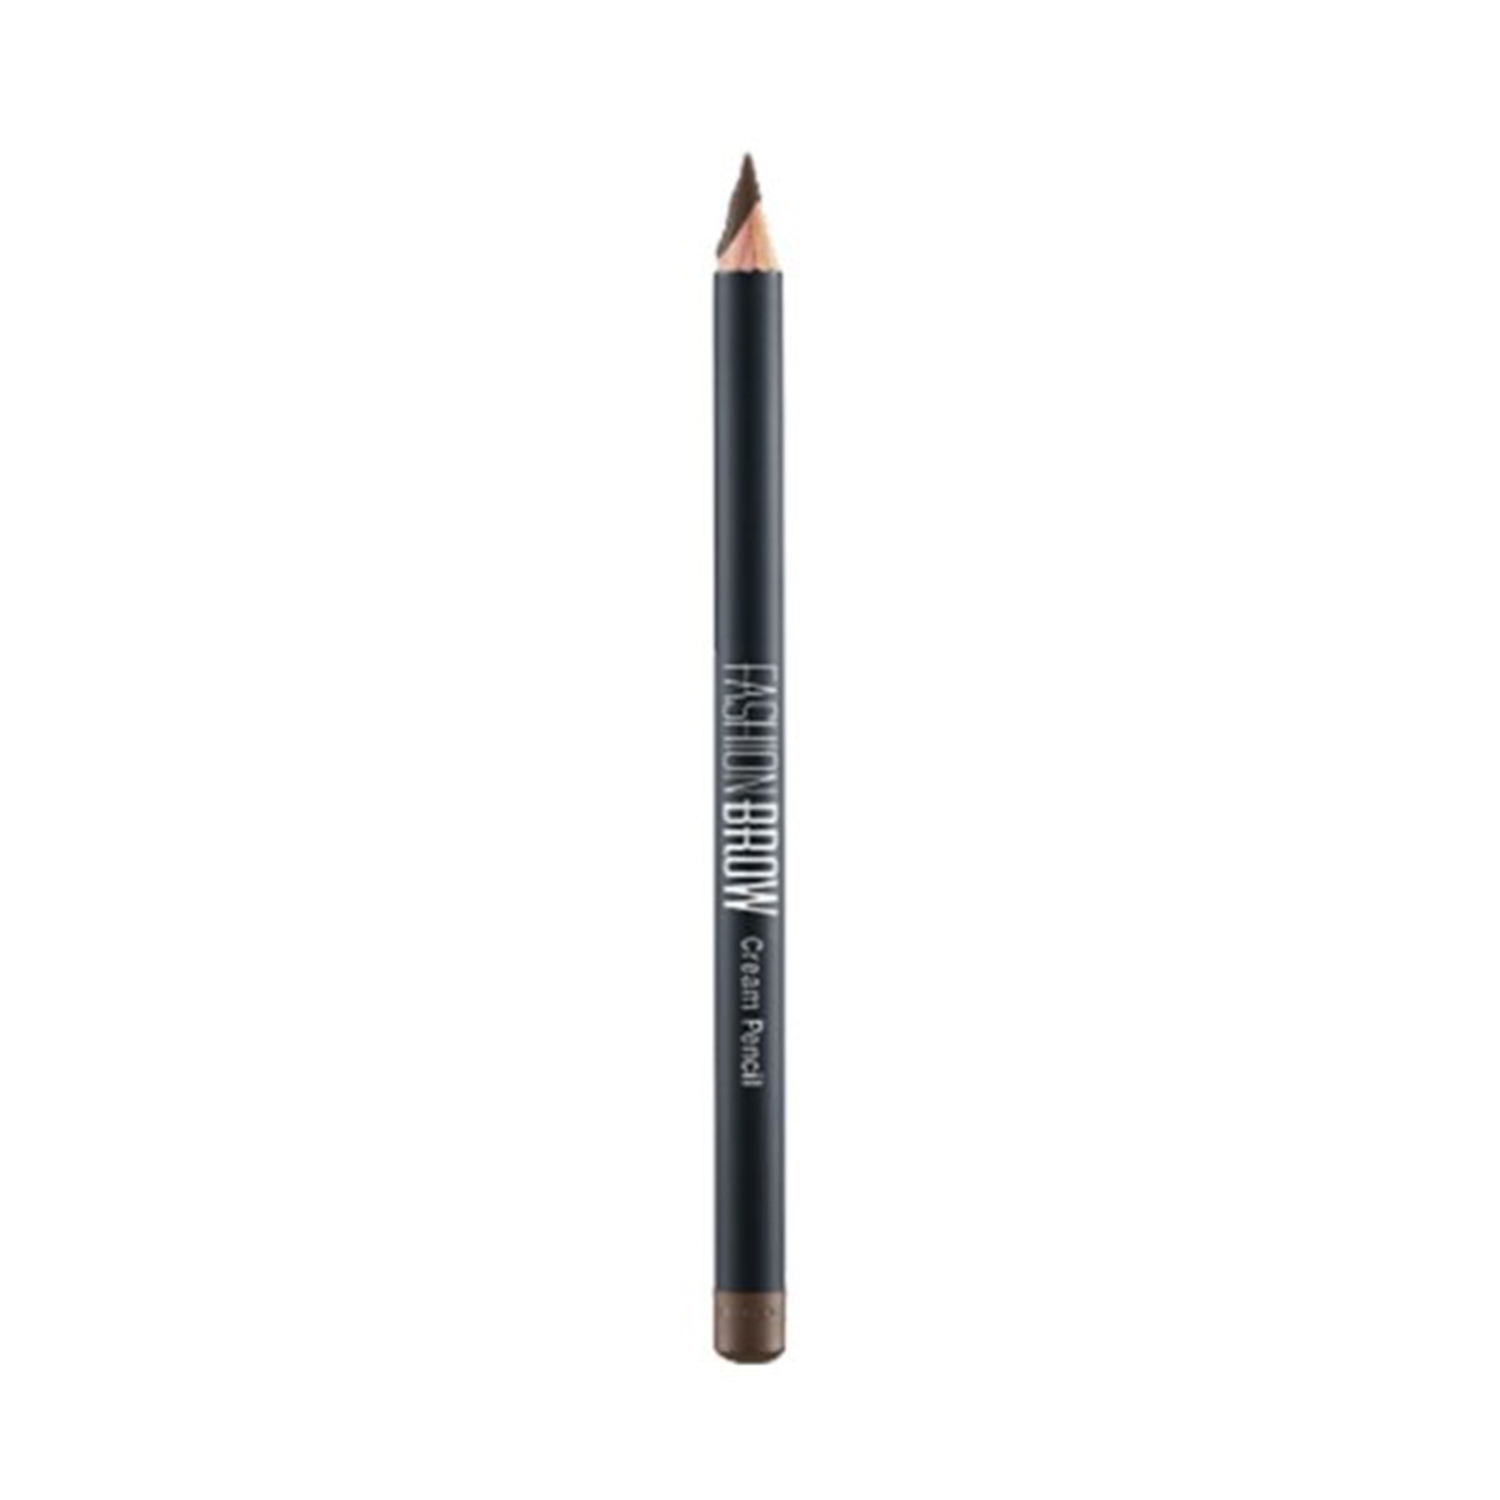 Maybelline New York Fashion Brow Cream Pencil - Dark Brown (0.78g)